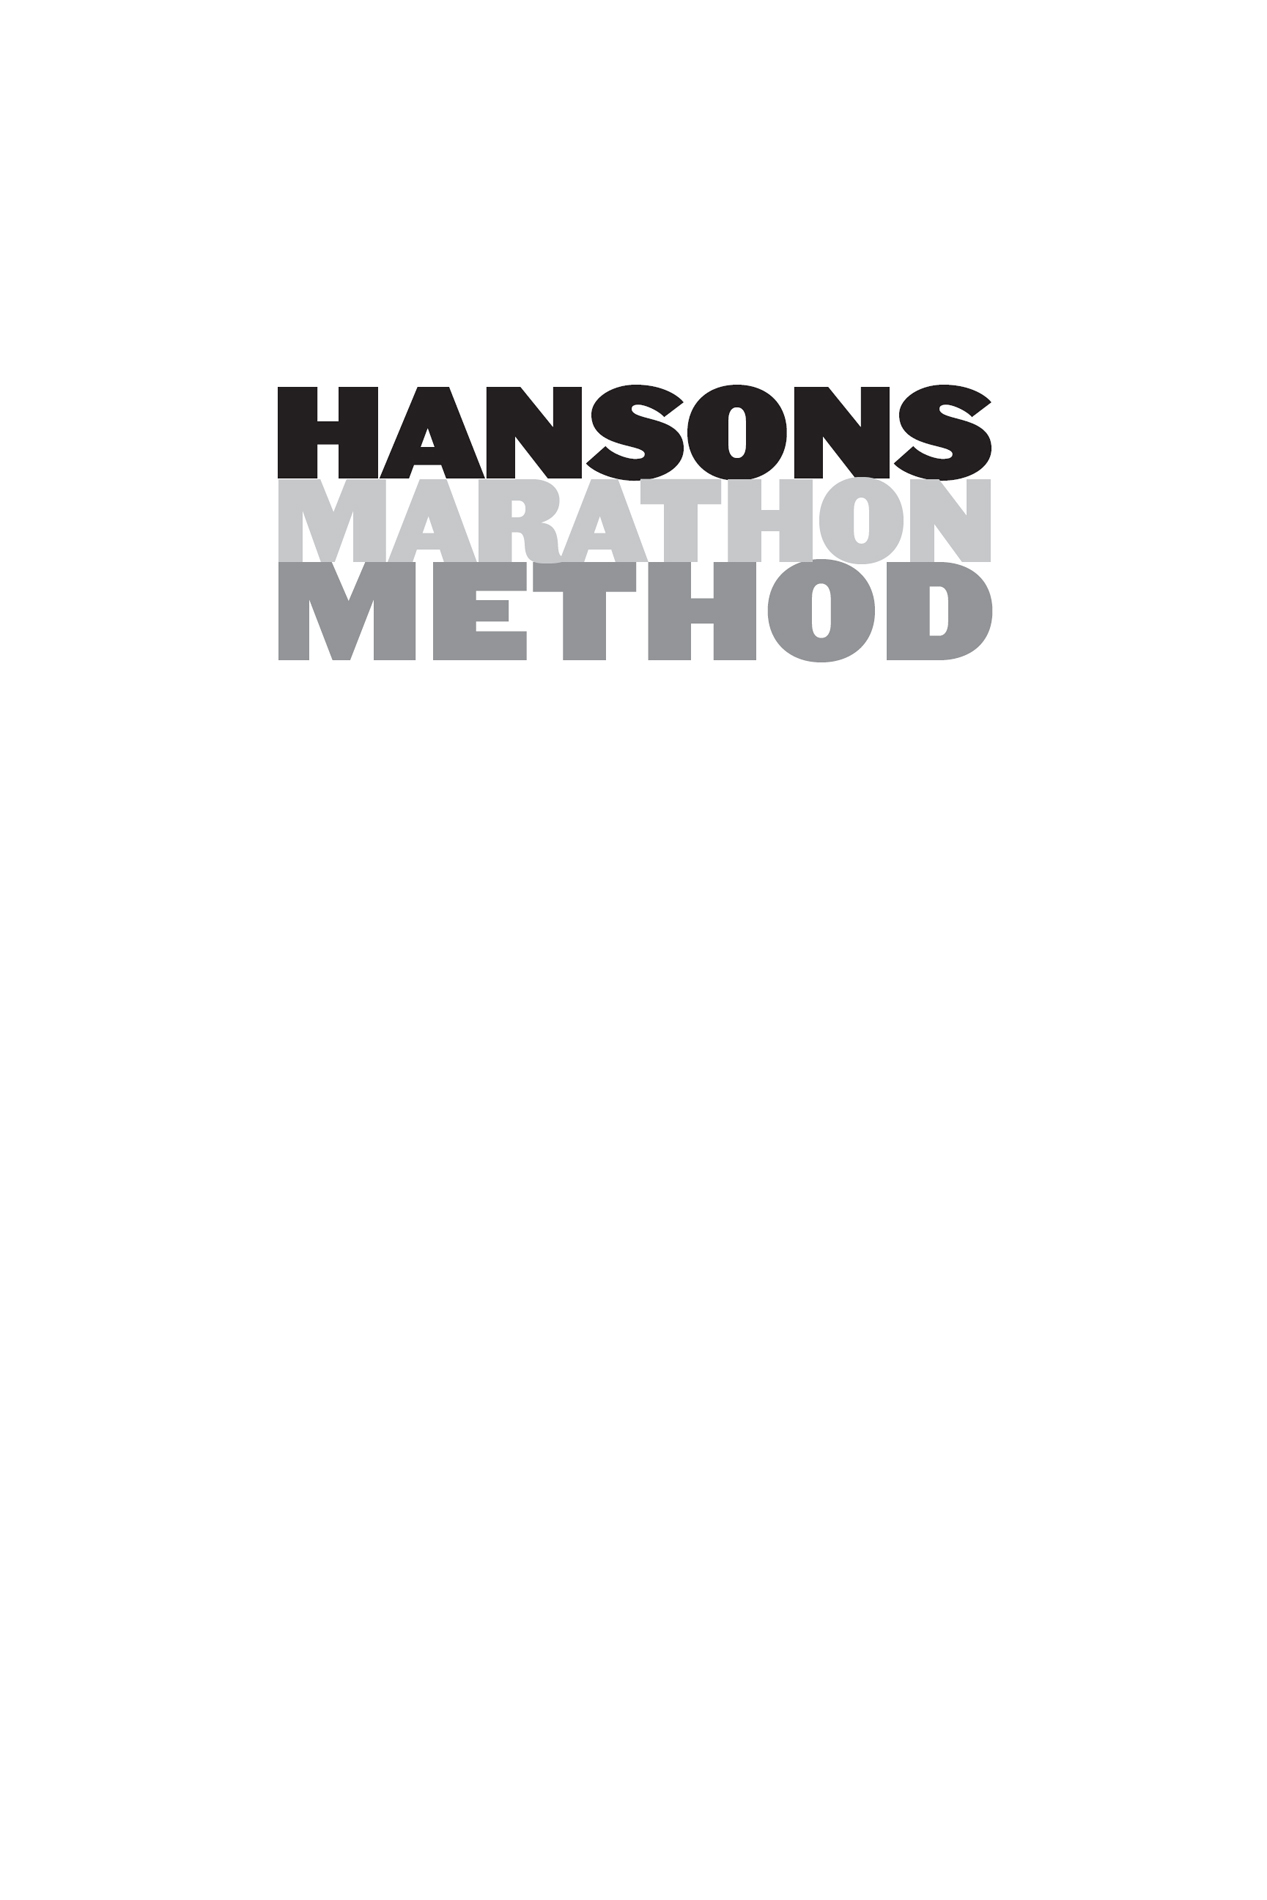 Hansons Marathon Method Run Your Fastest Marathon the Hansons Way - image 1